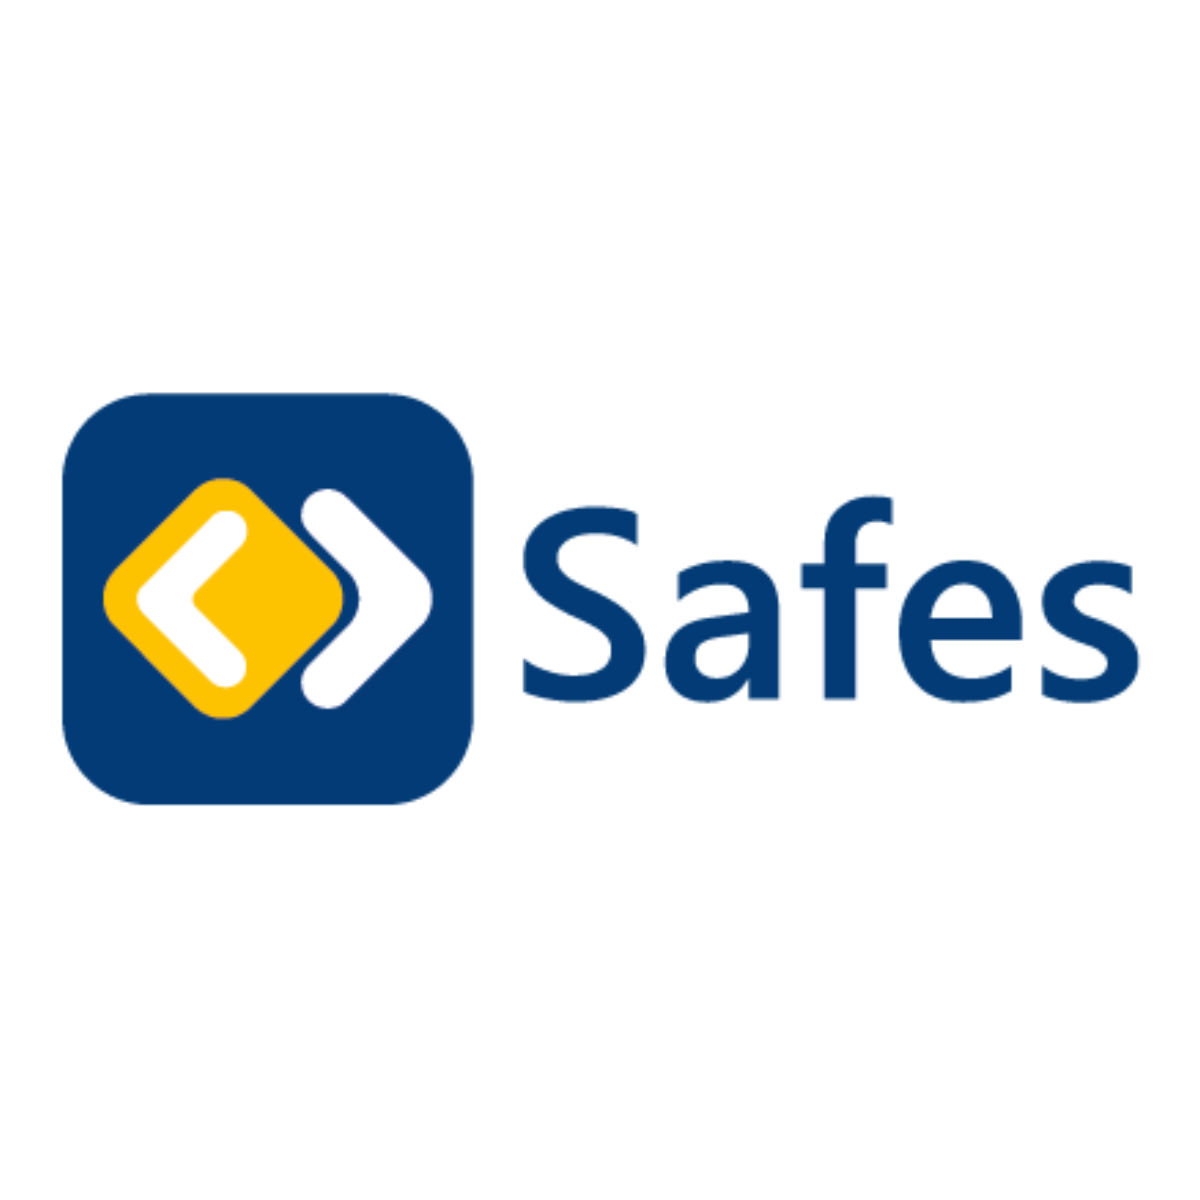 Safes